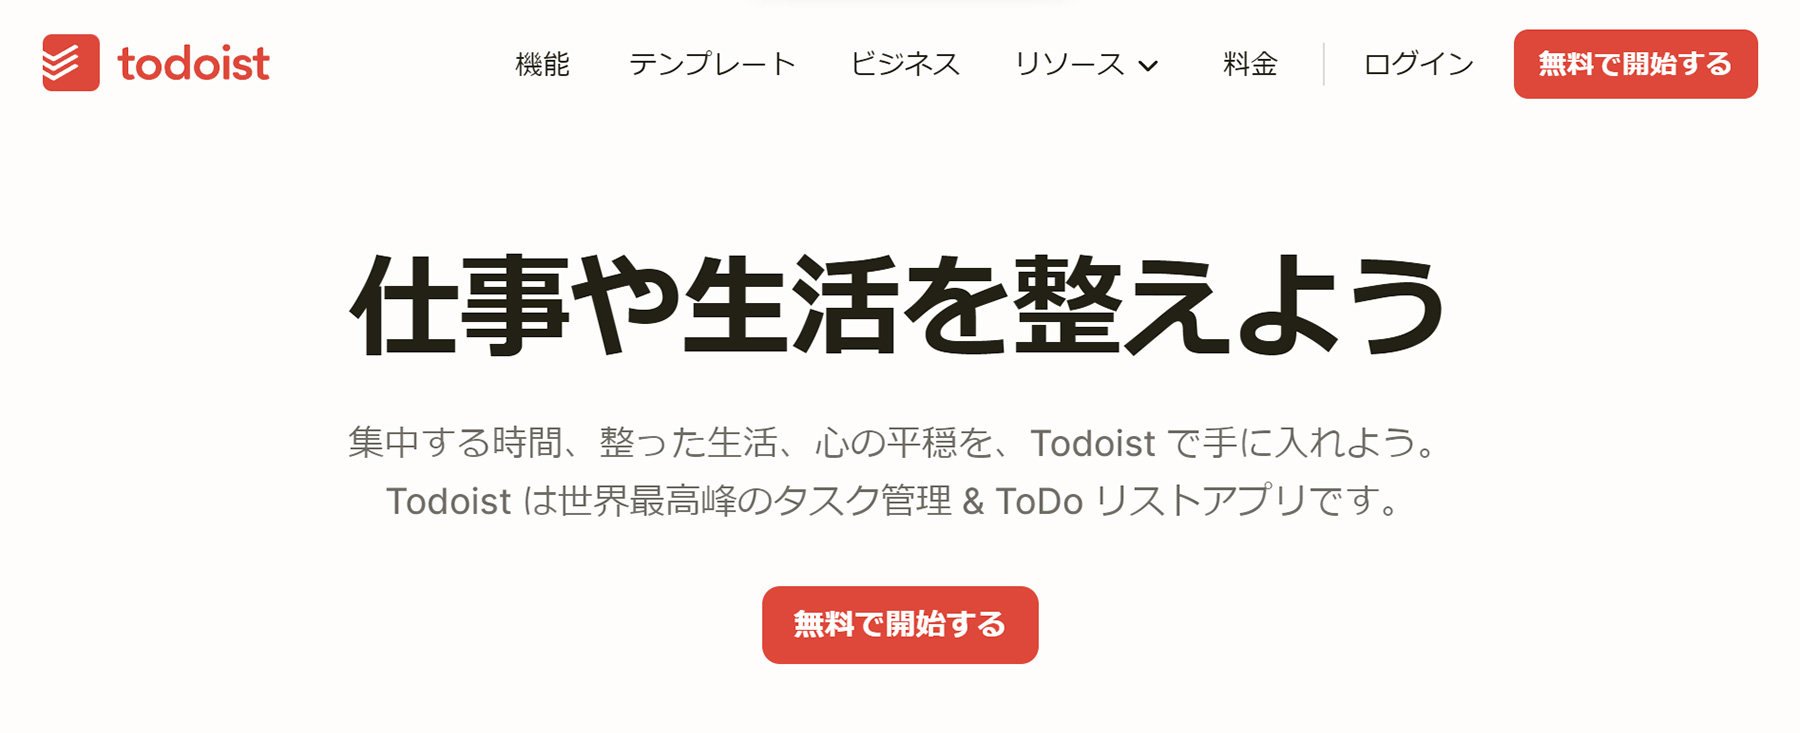 Todoist公式Webサイト